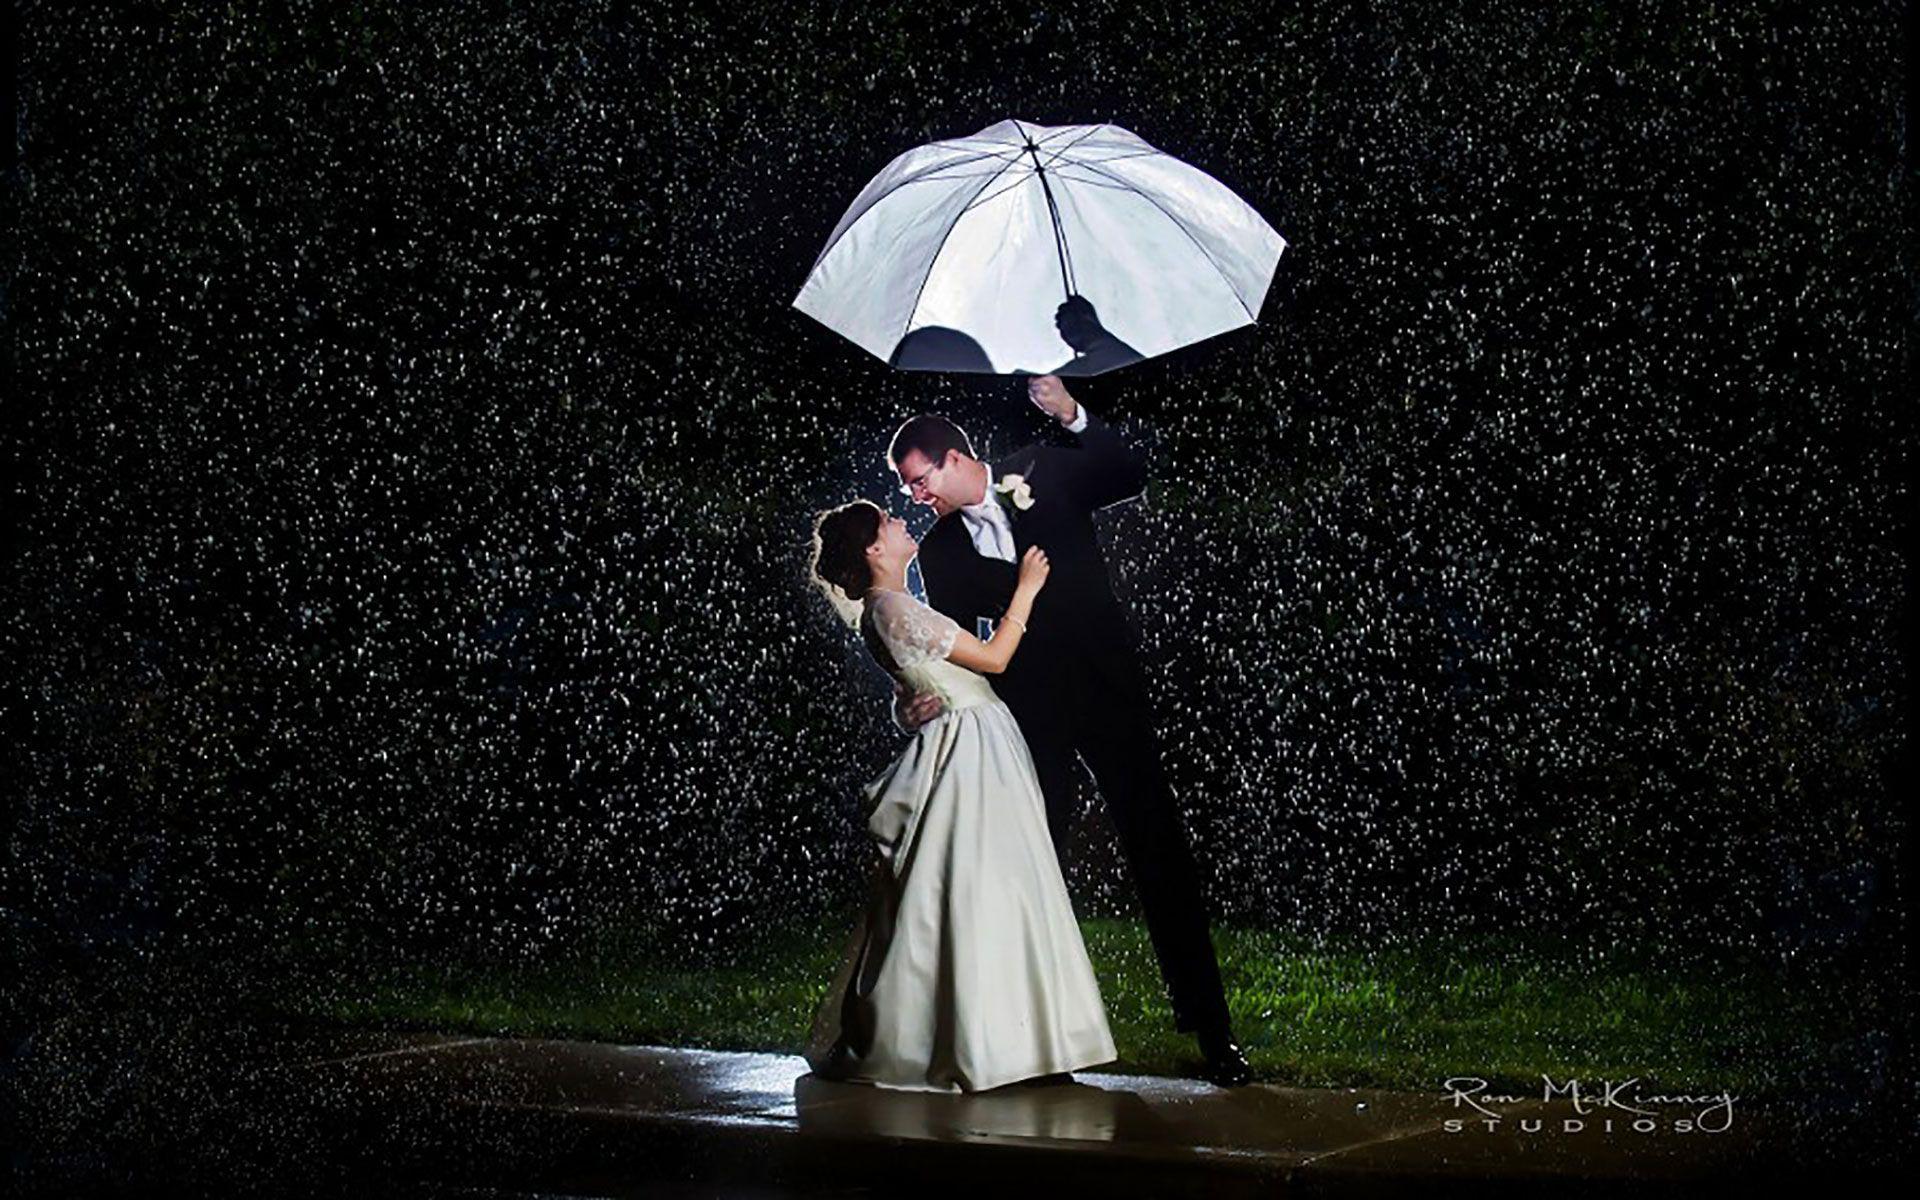 Romance of couple in a rainy night. Romantic & Sad Couple